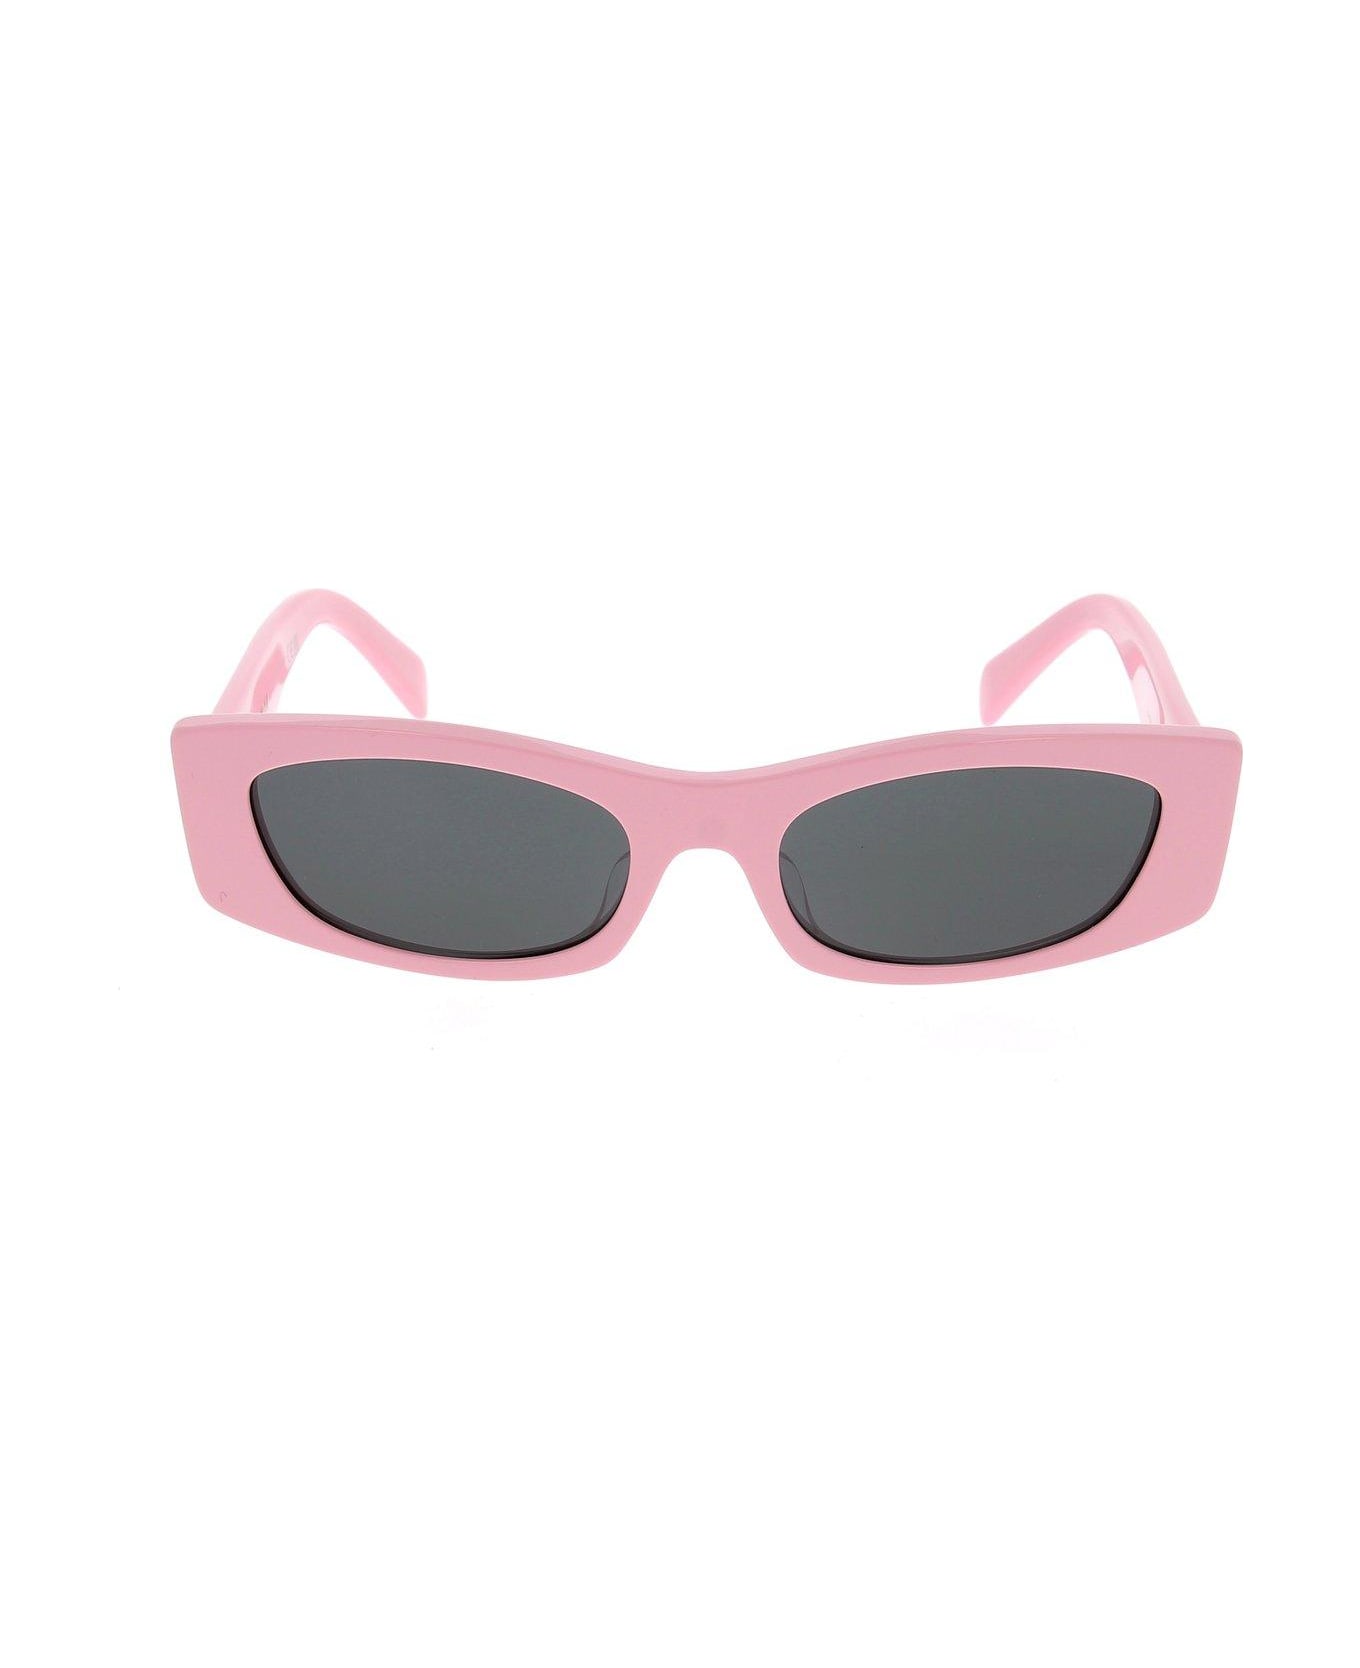 Celine rectangular Frame Sunglasses - 72a サングラス